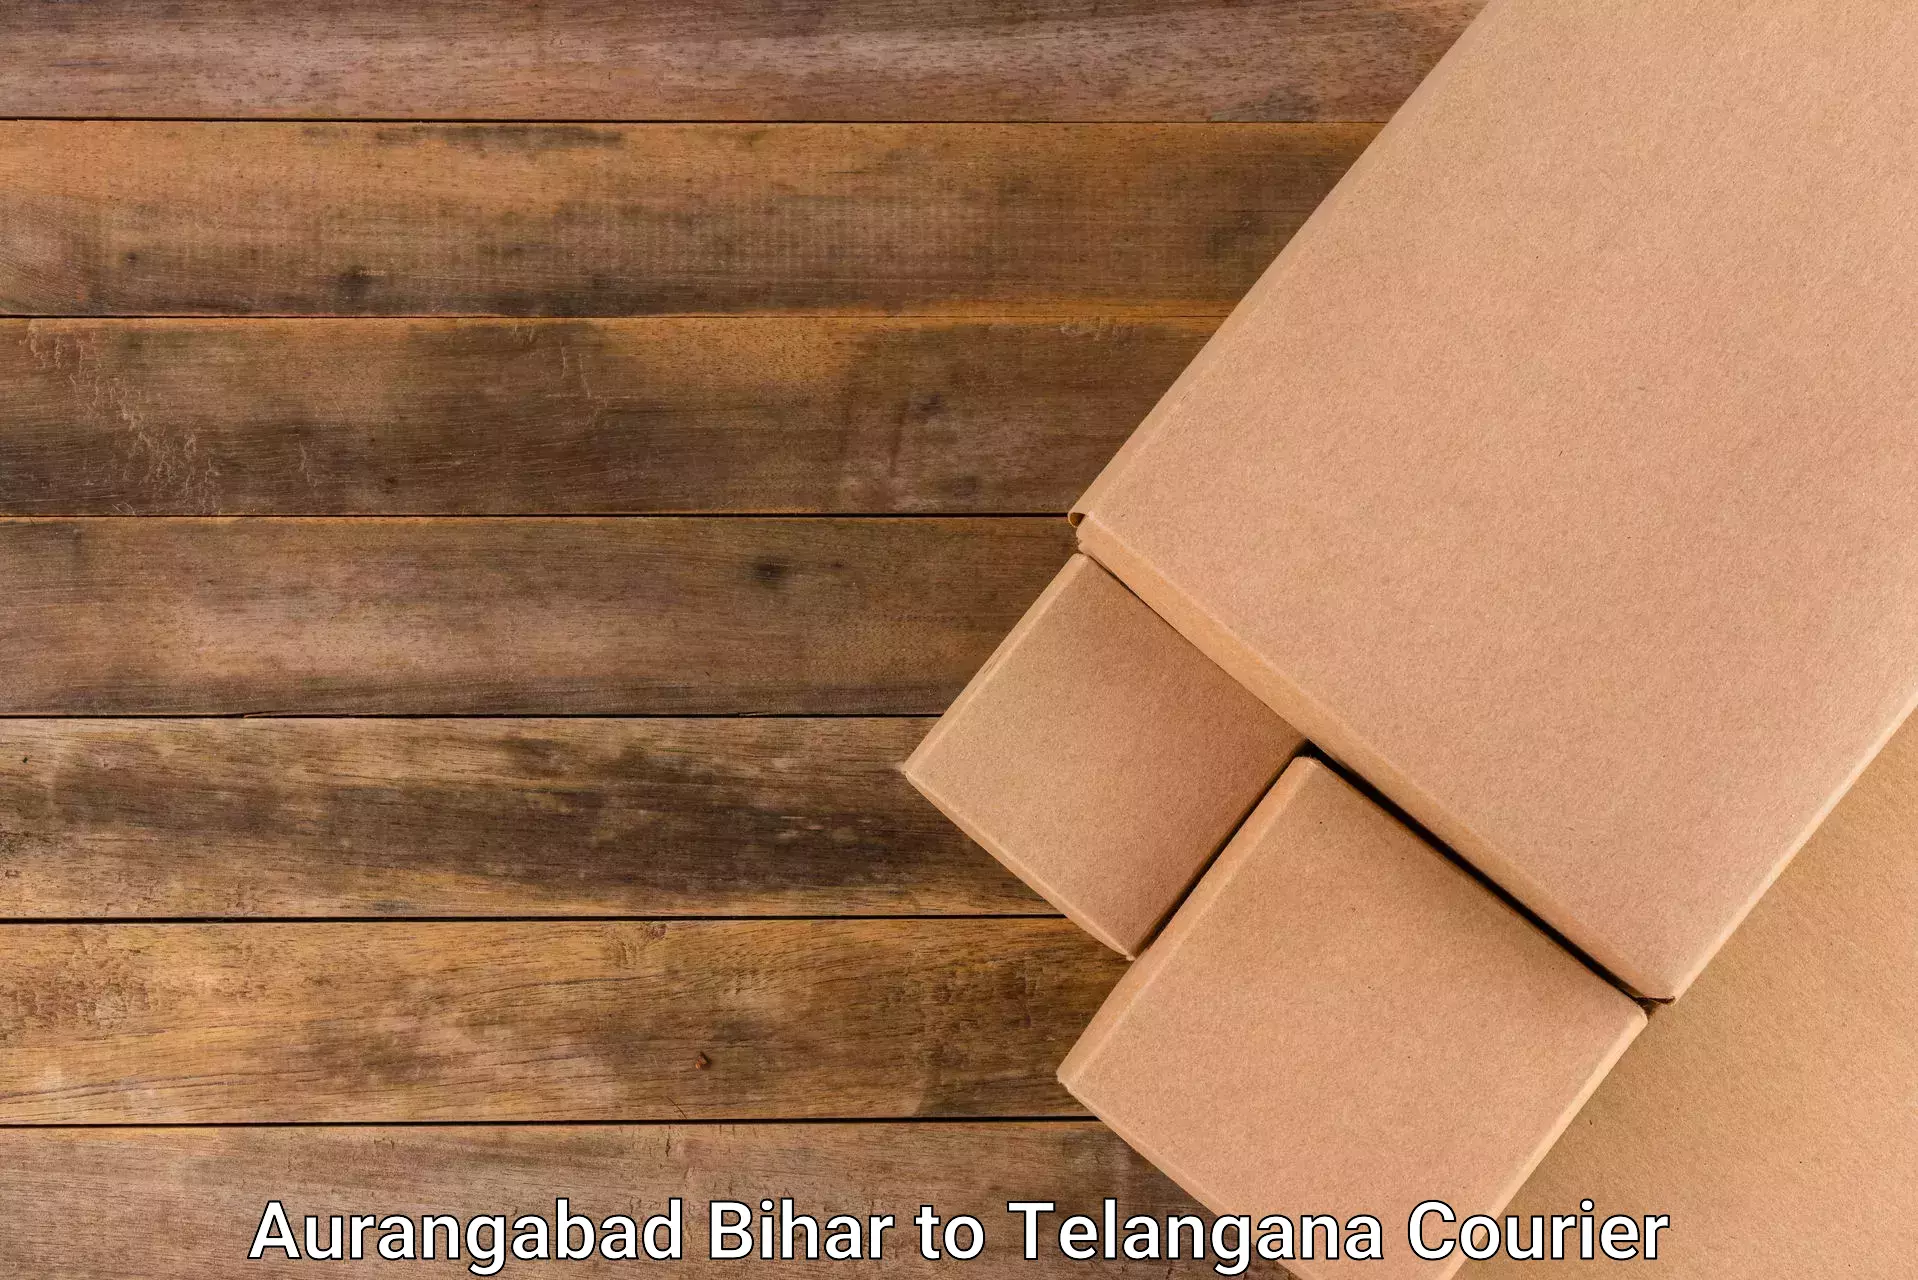 Nationwide delivery network Aurangabad Bihar to Jogulamba Gadwal